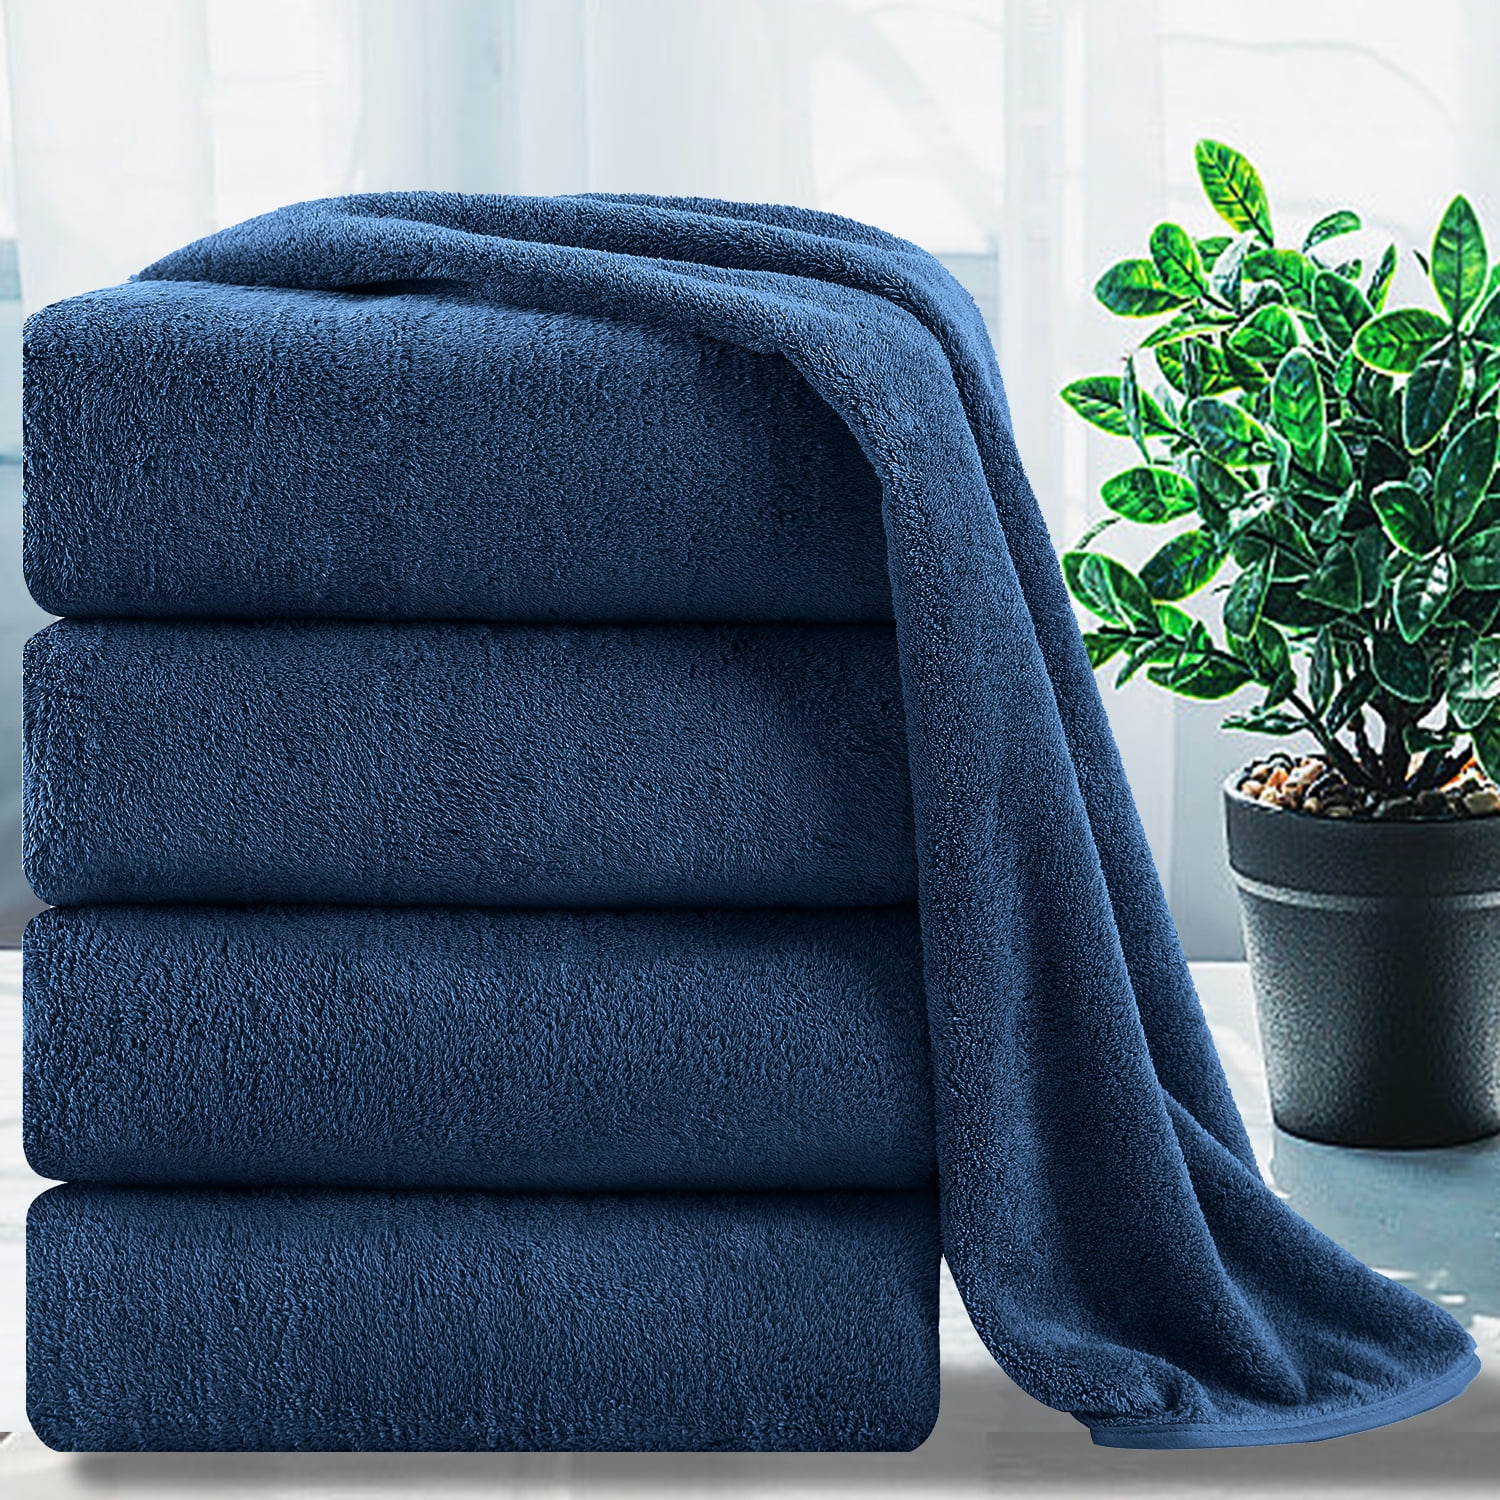 Jessy Home 8 Piece Oversized Blue Bath Towel Set-2 Extra Large